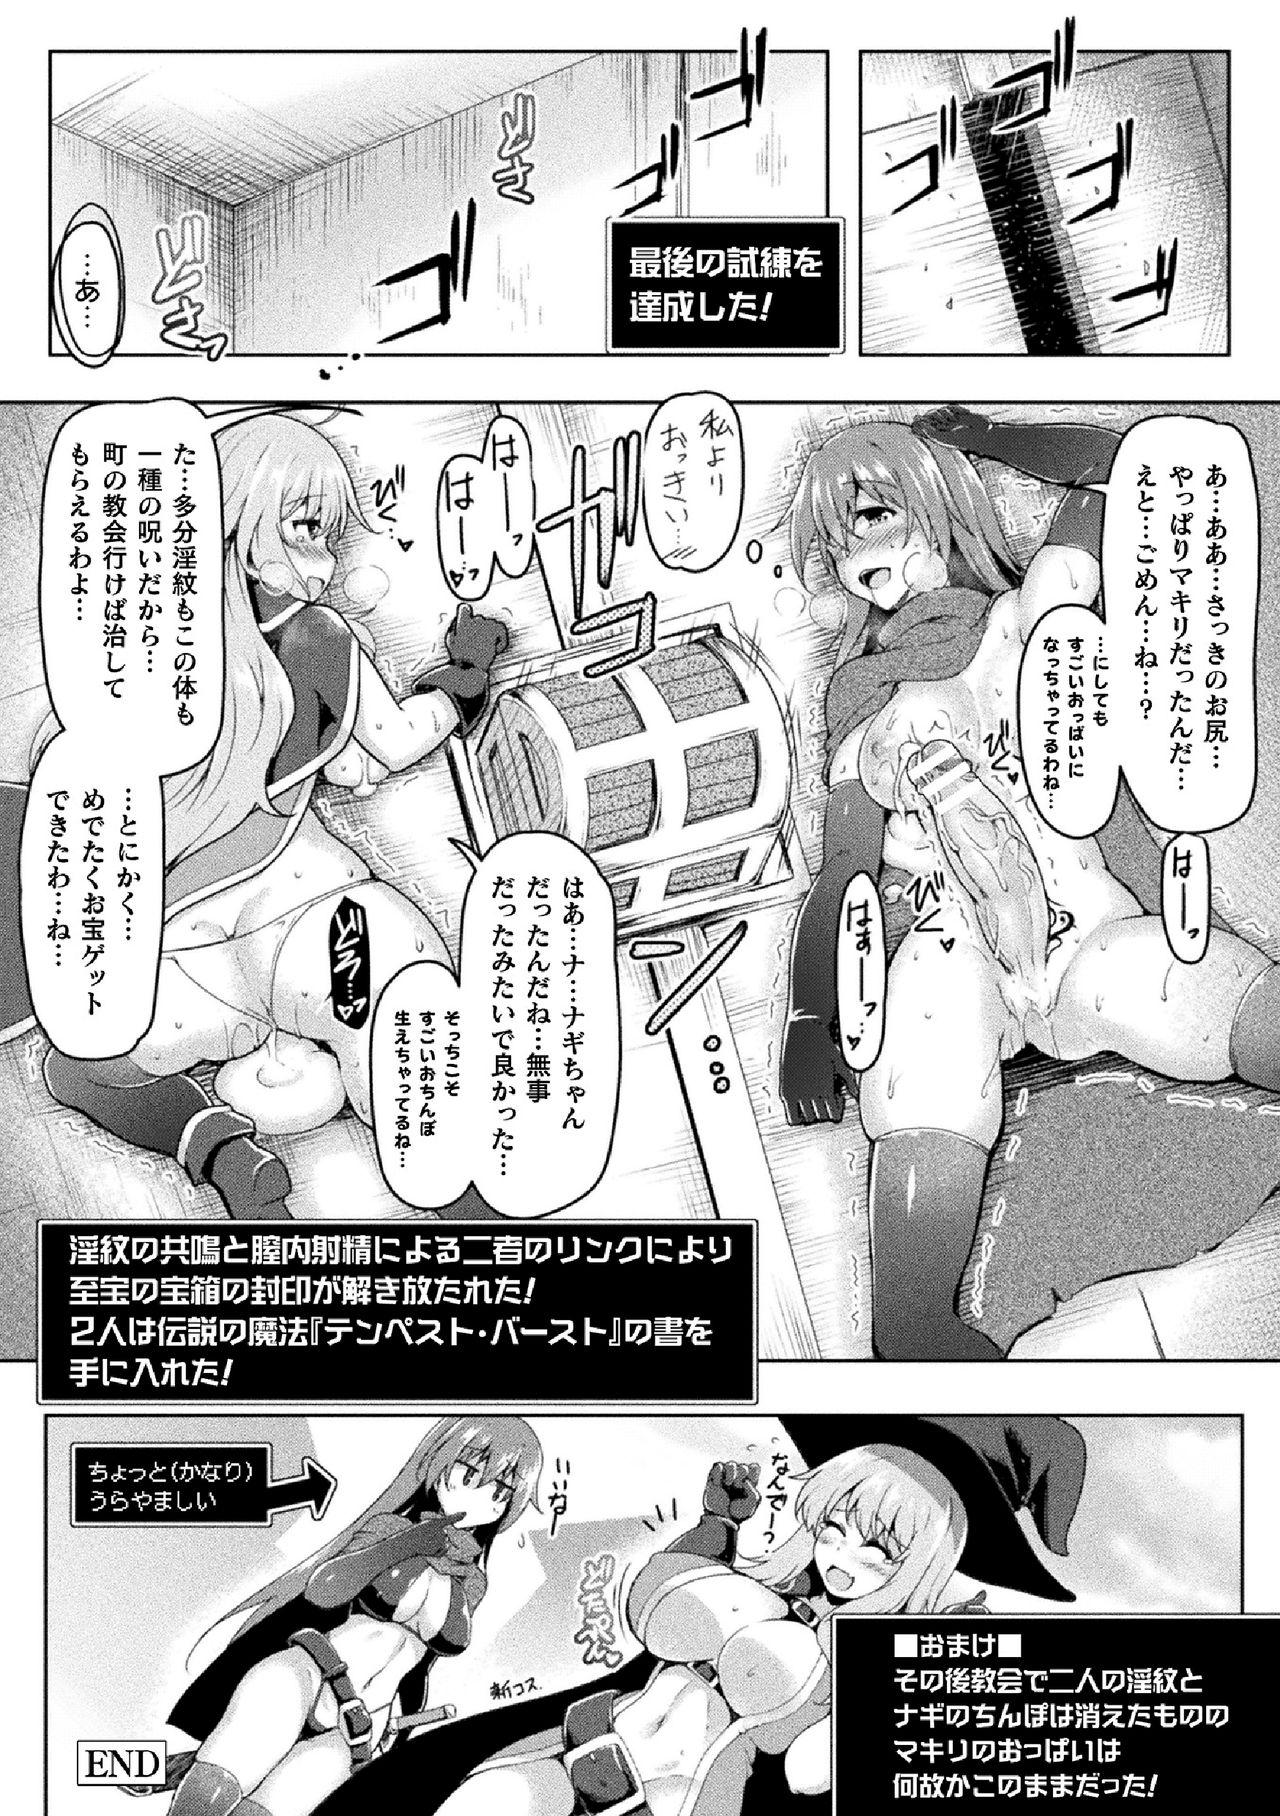 2D Comic Magazine Zecchou Kairaku ga Tomaranai Ero-Trap Dungeon Vol.2 81